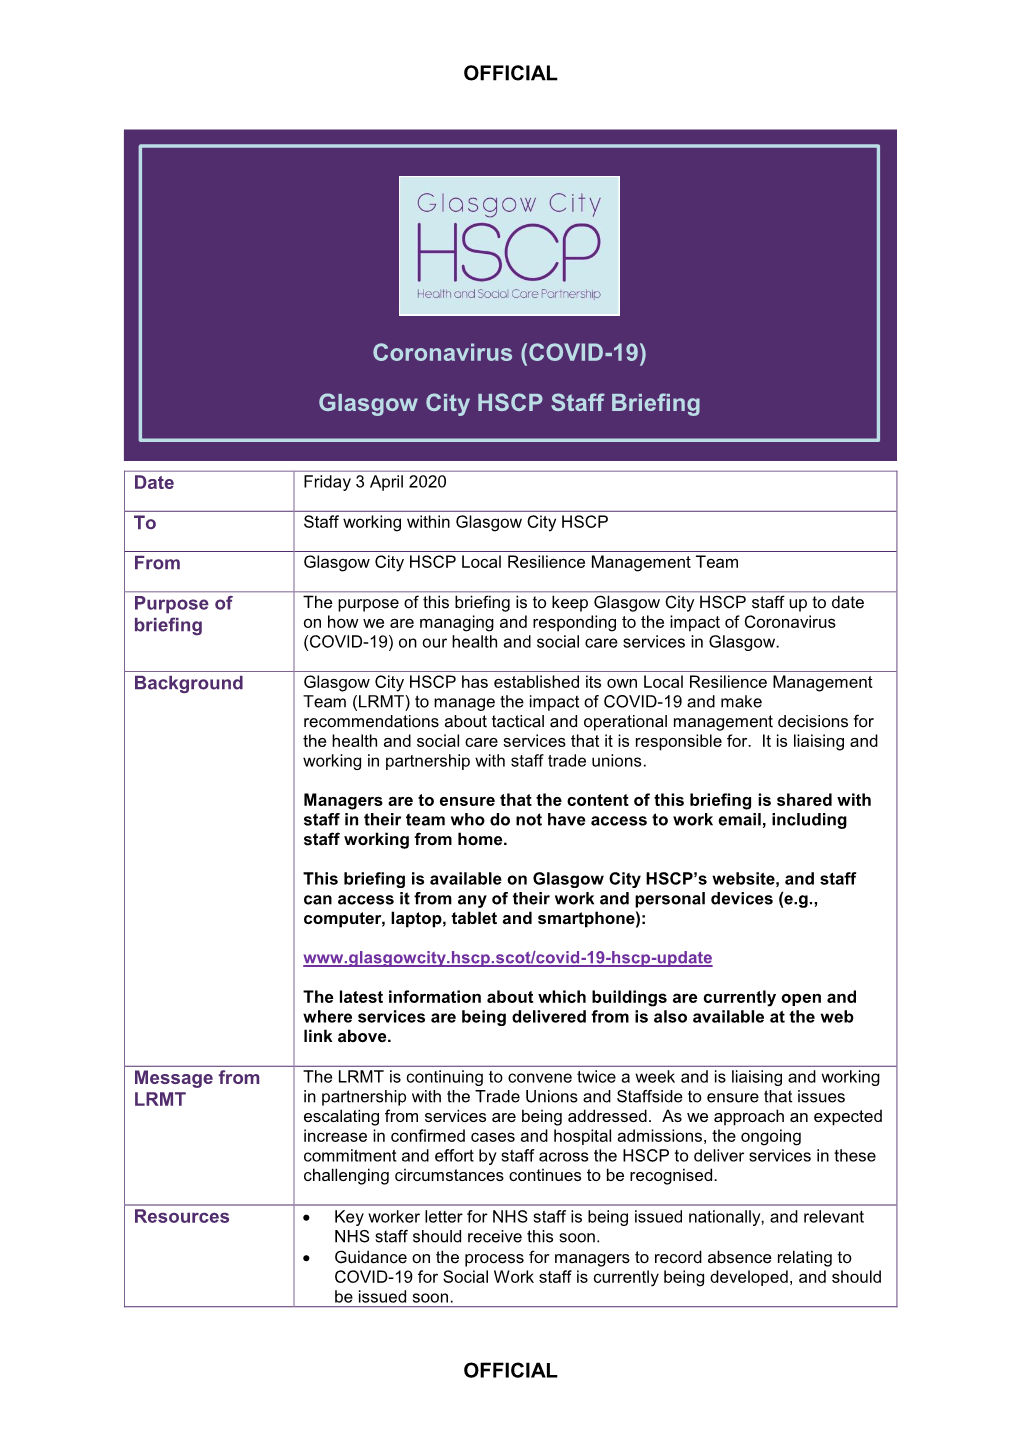 Coronavirus (COVID-19) Glasgow City HSCP Staff Briefing